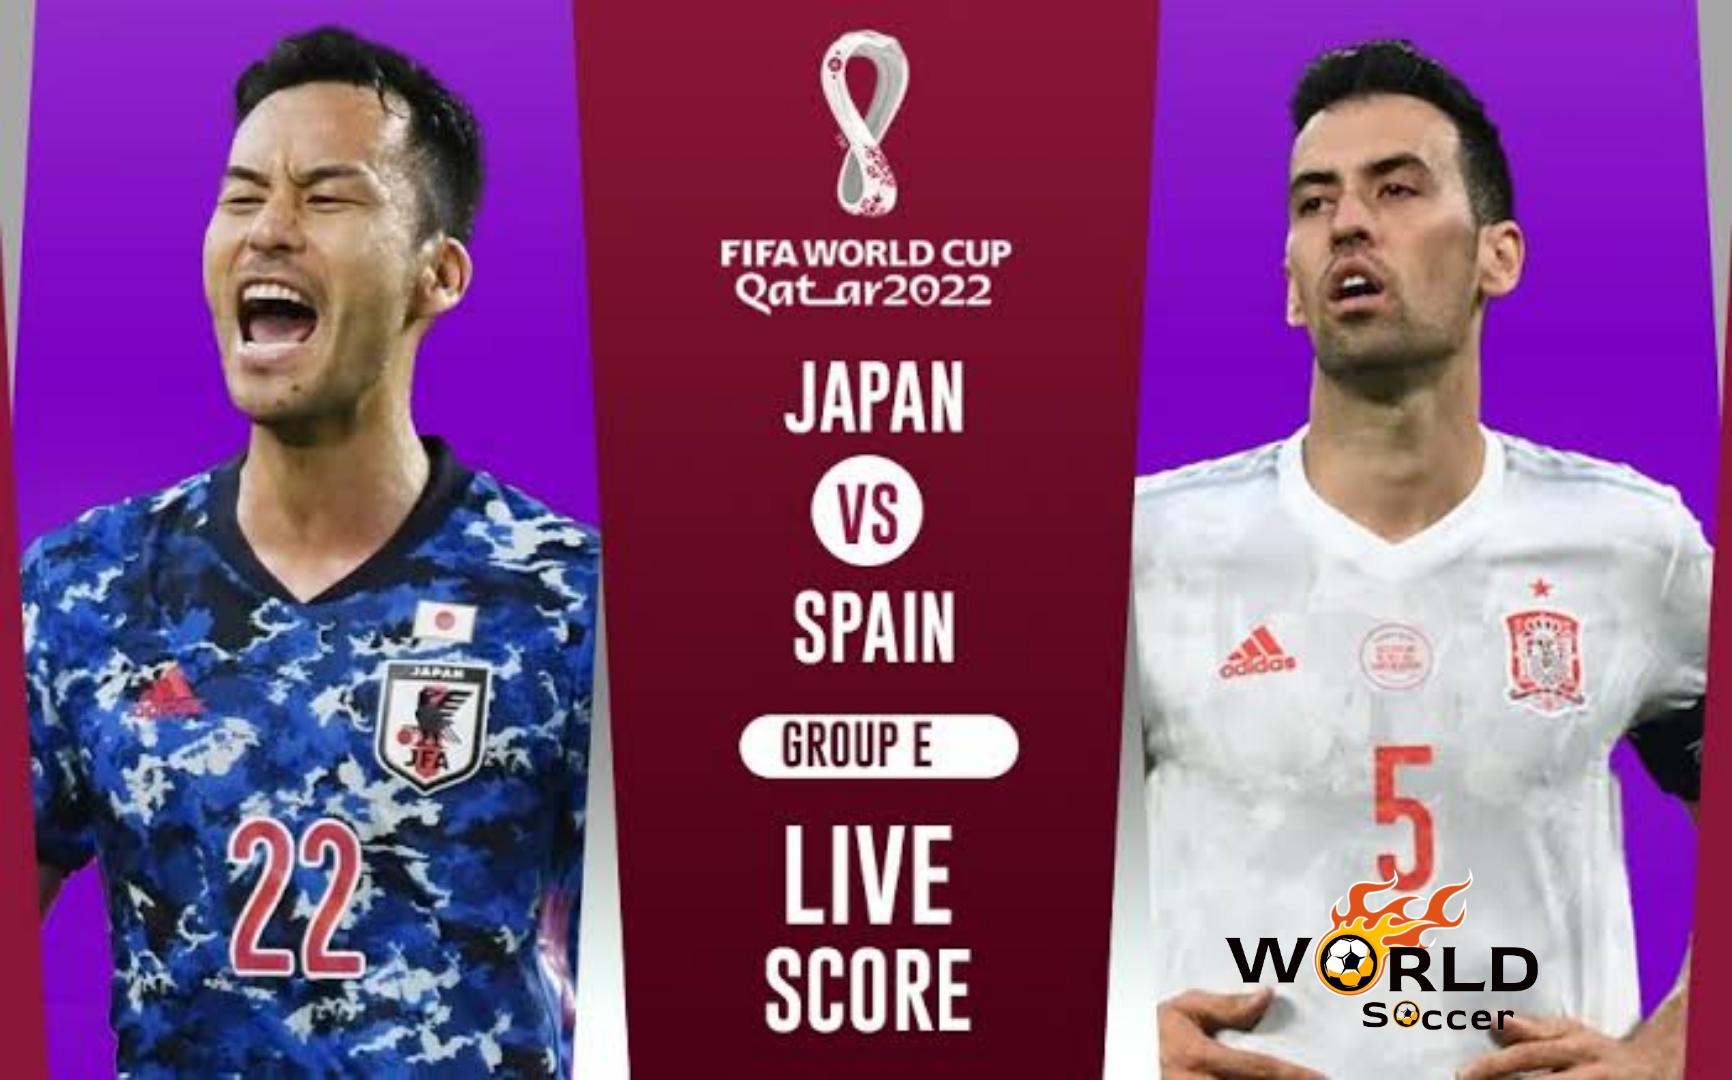 Watch the Spain vs Japan match, broadcast live, Spain vs Japan live today, Thursday 12-01-2022, the 2022 World Cup